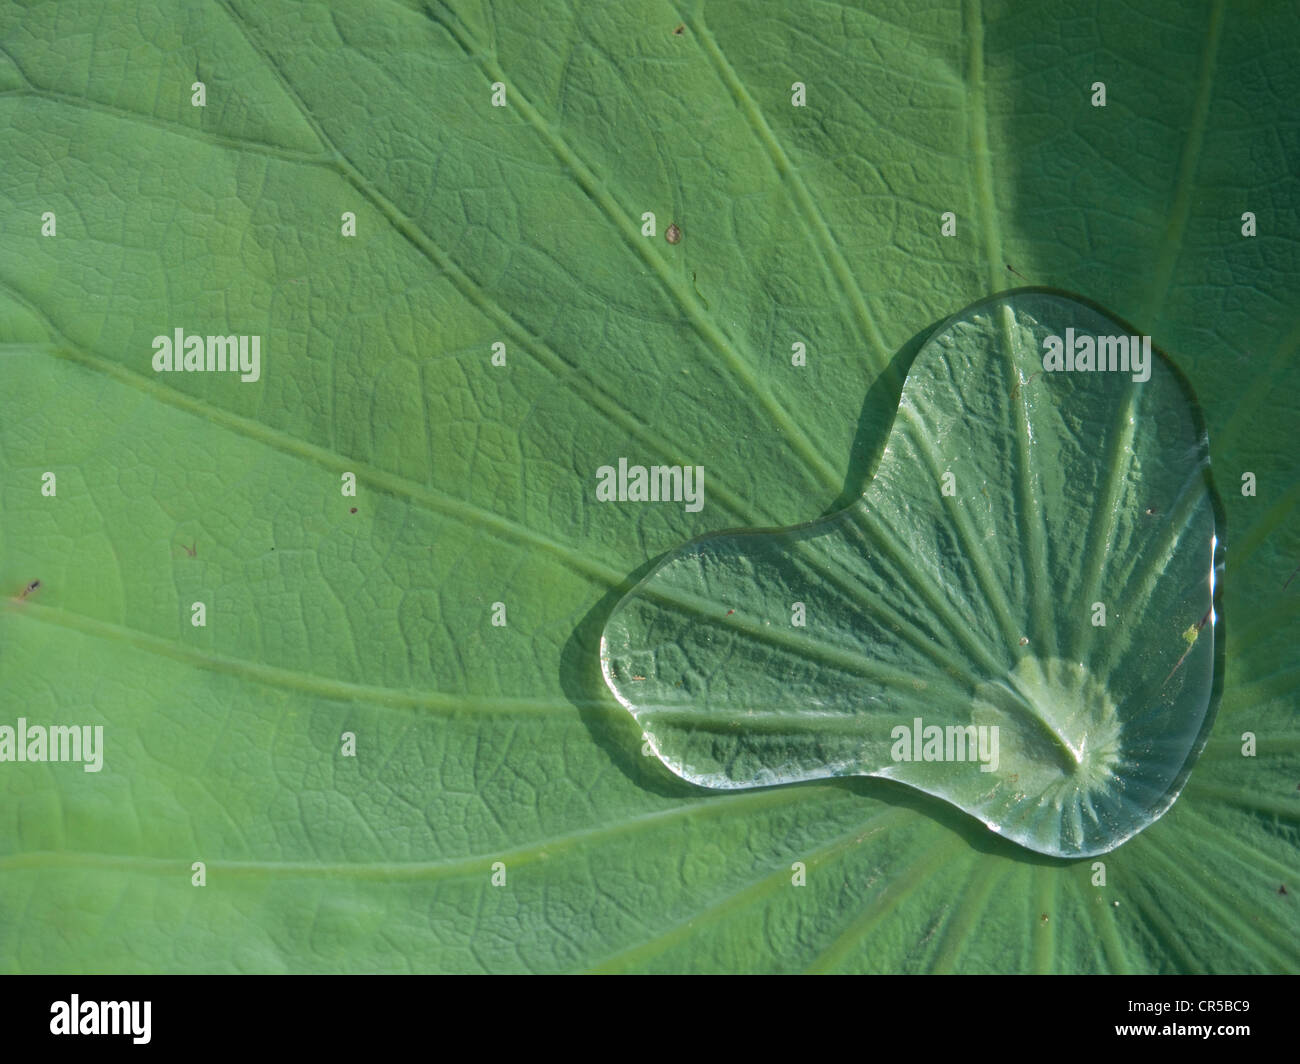 Rainwater collected by the leaf a Lotus (Nelumbo nucifera), Srinagar, Jammu and Kashmir, India, Asia Stock Photo